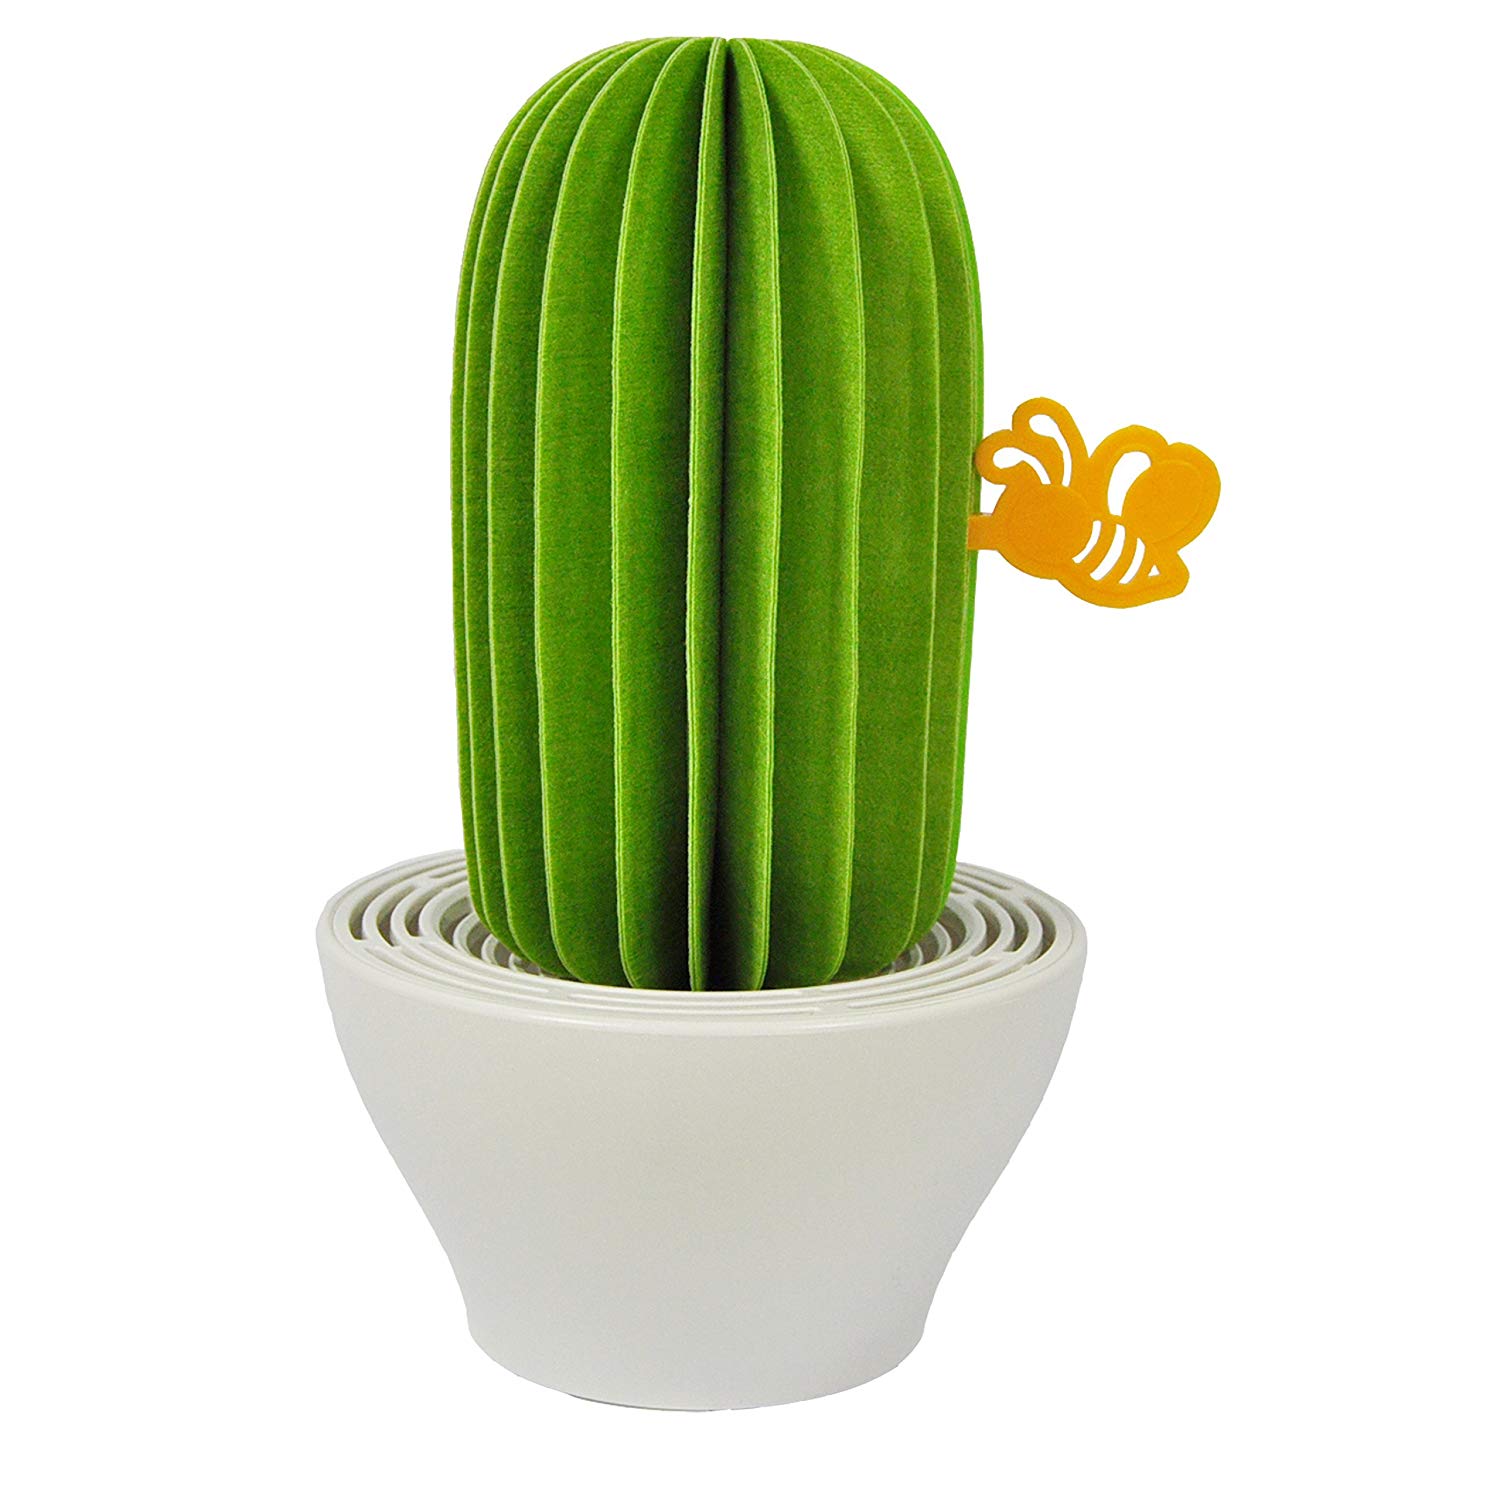 Amazon.com: HSI Cactus Non-Electric Personal Humidifier in Green ...